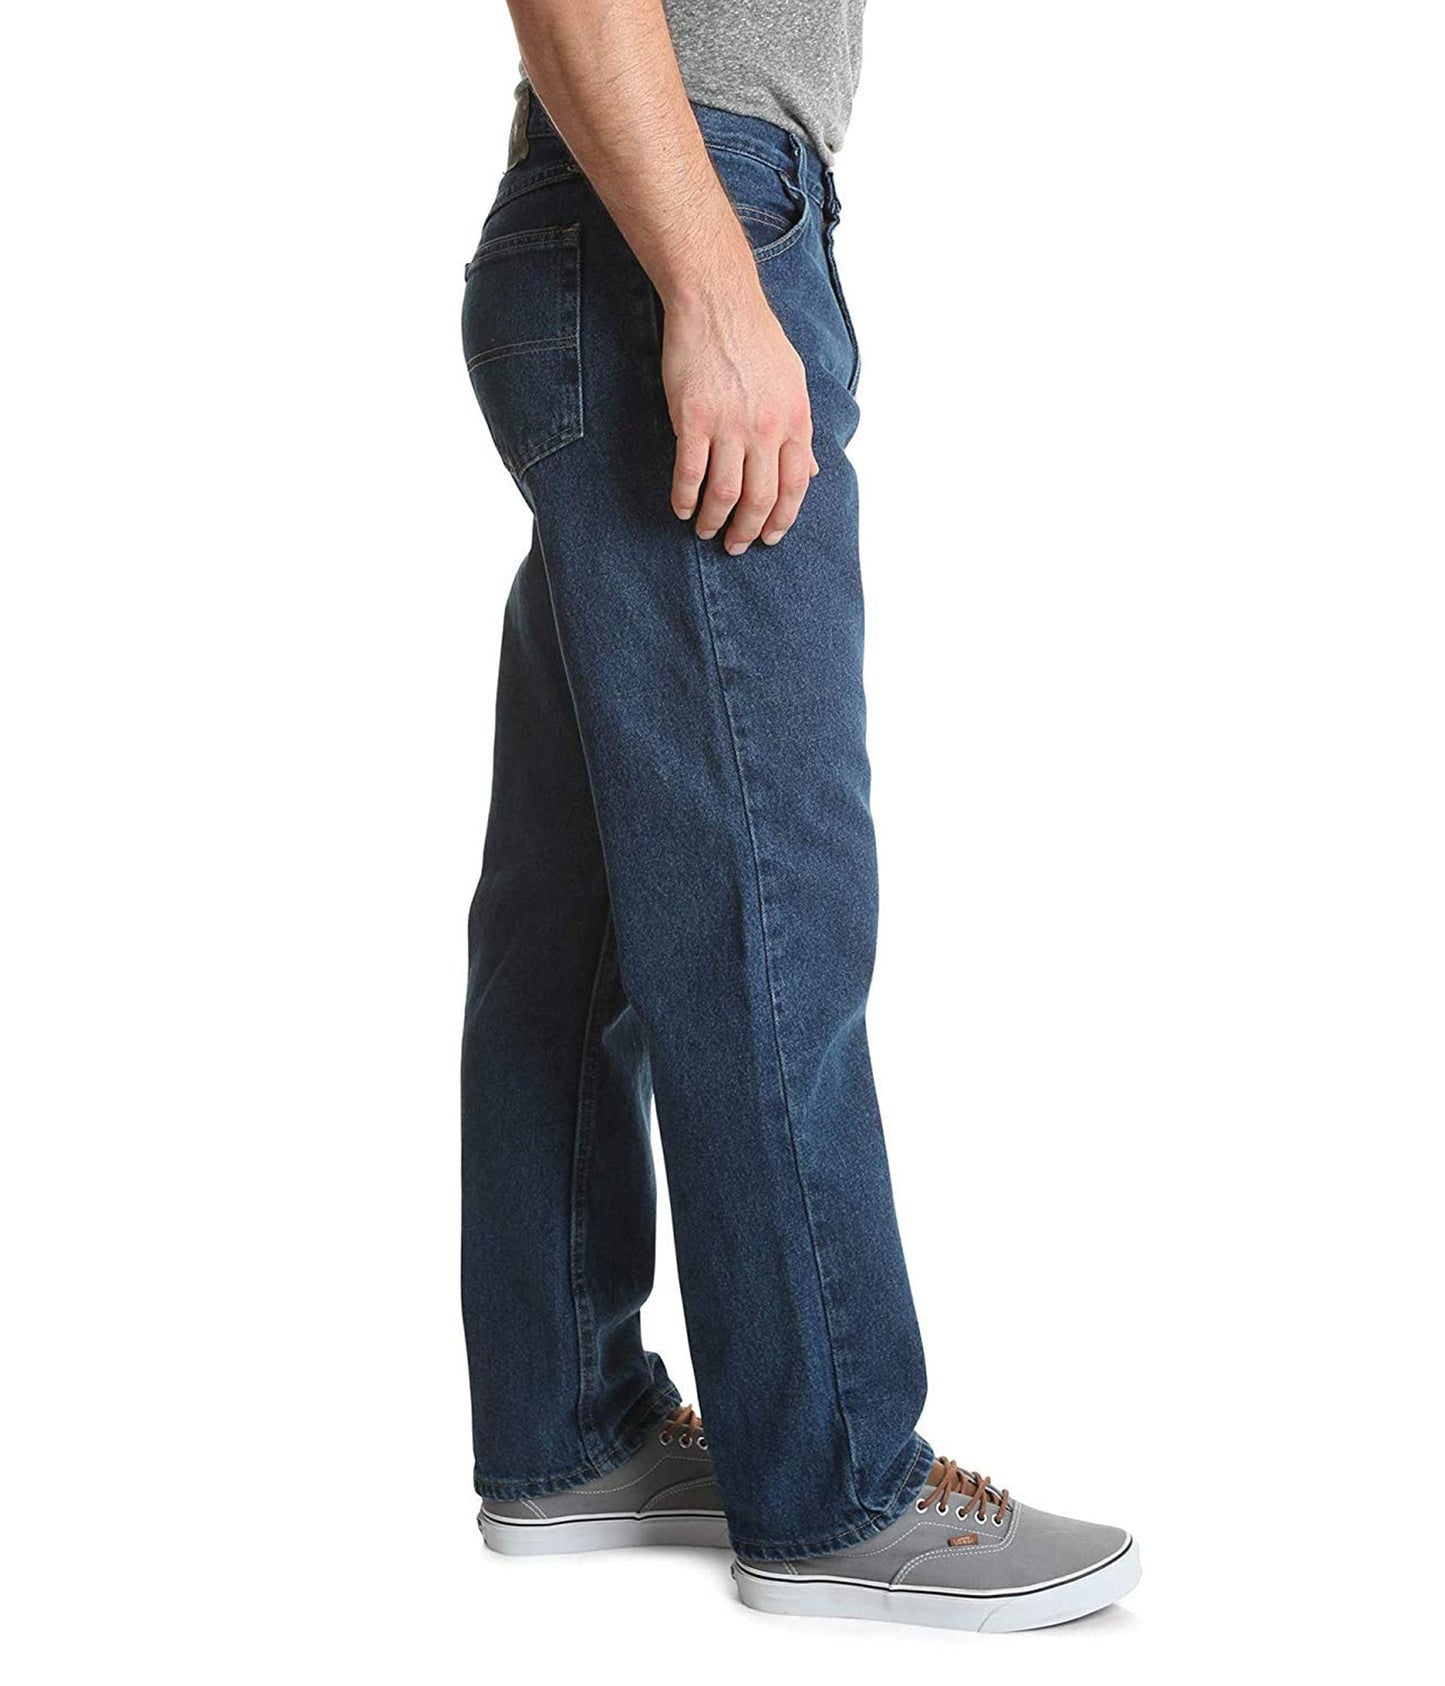 Wrangler Authentics Men's Classic 5-Pocket Relaxed Fit Cotton Jean, Dark Stonewash, 34W x 30L